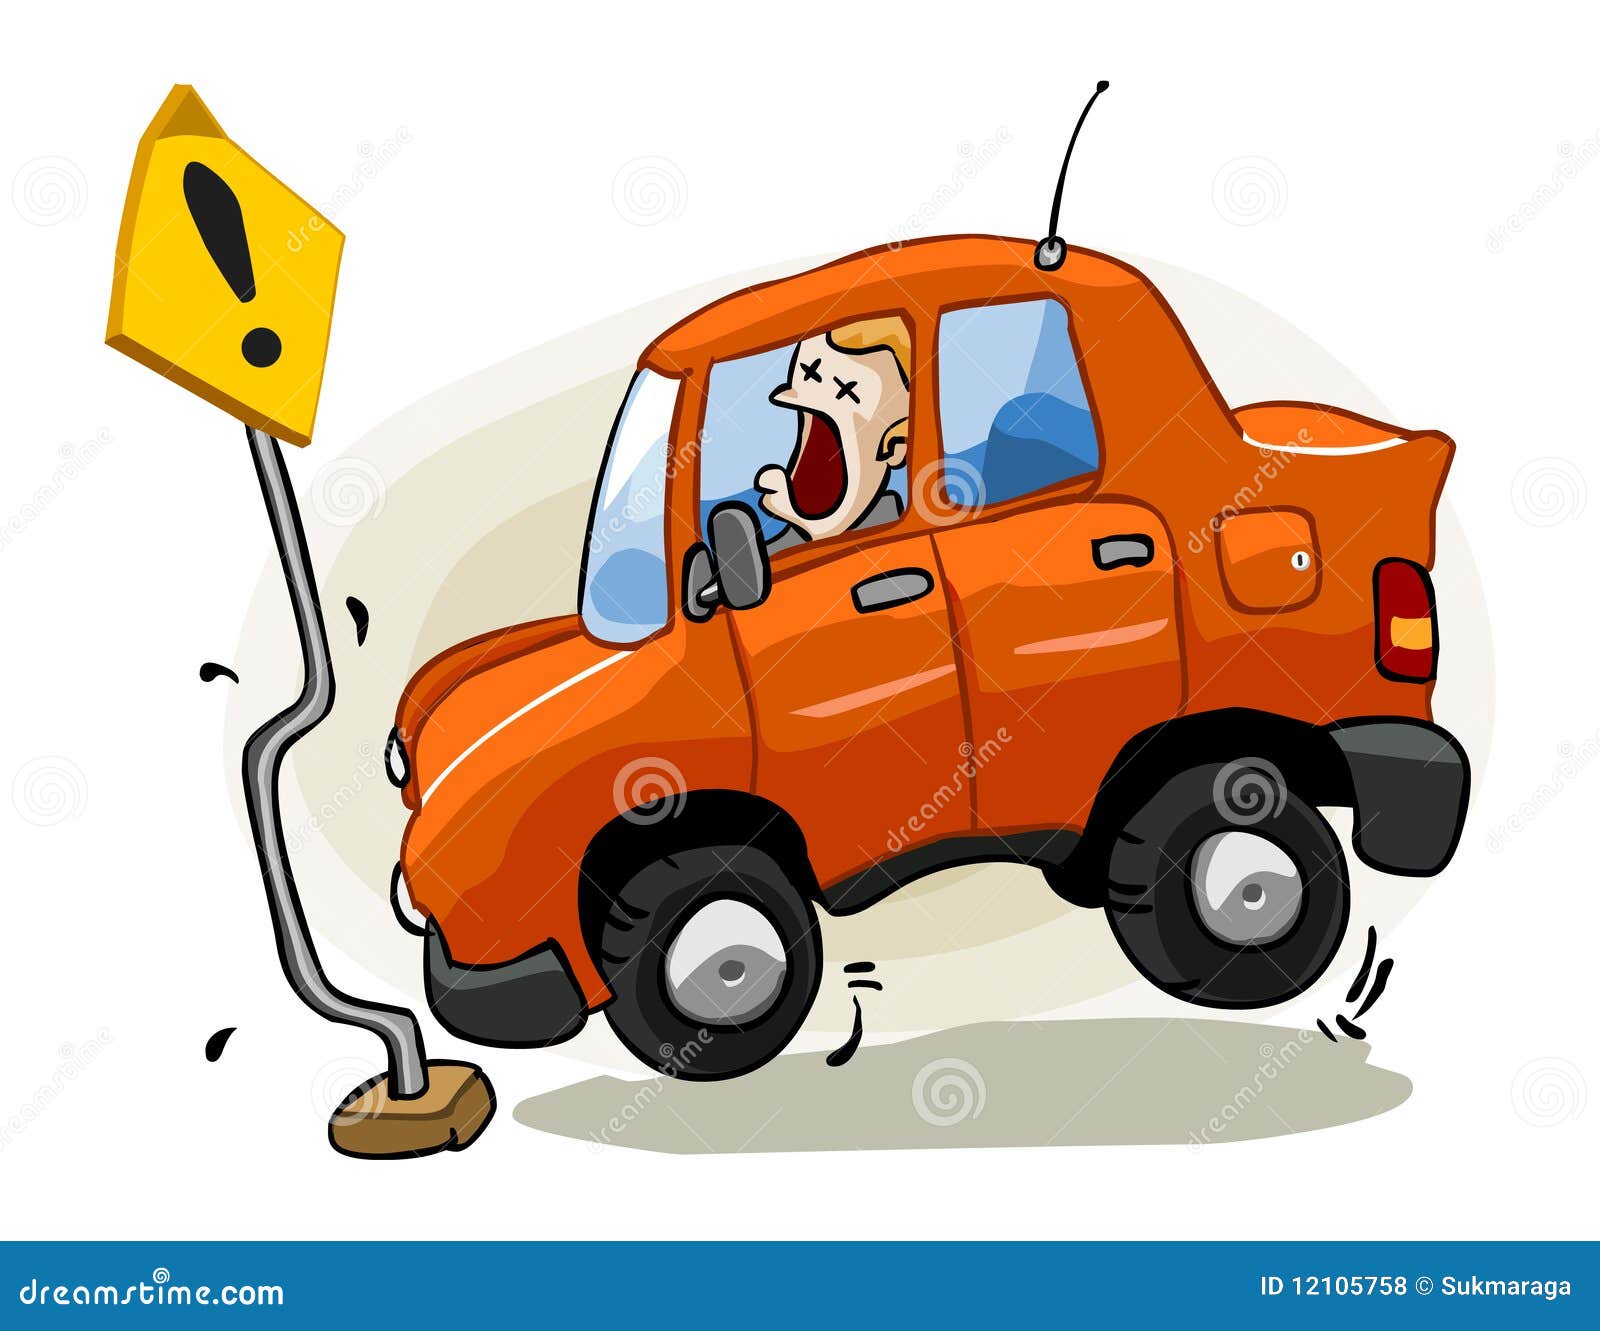 Accident for insurance stock vector. Illustration of smash - 12105758